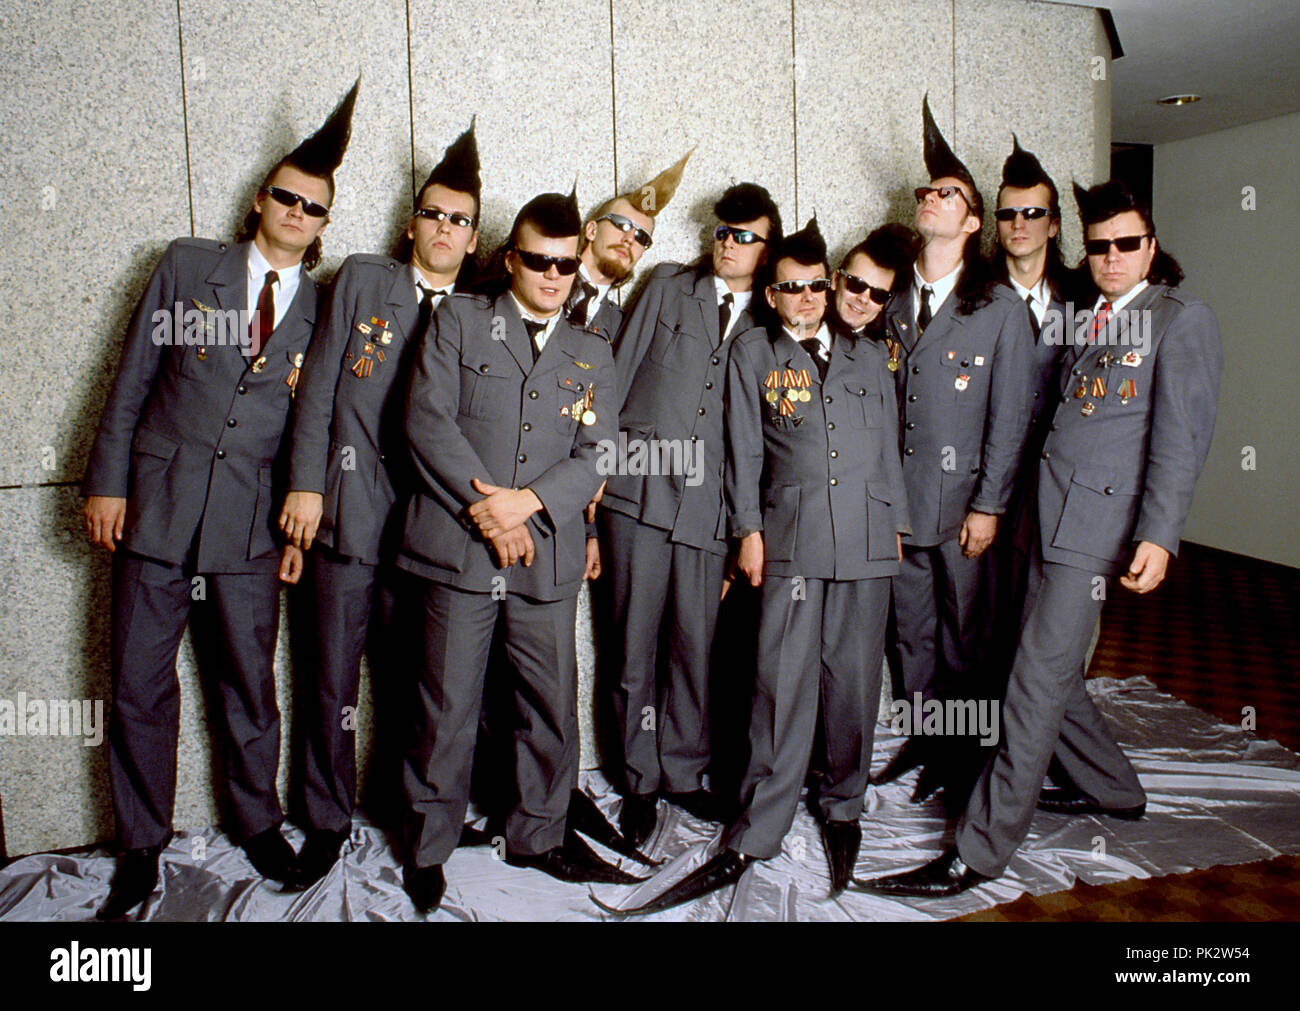 Finish band Leningrad Cowboys in November 1992 in Germany | usage ...